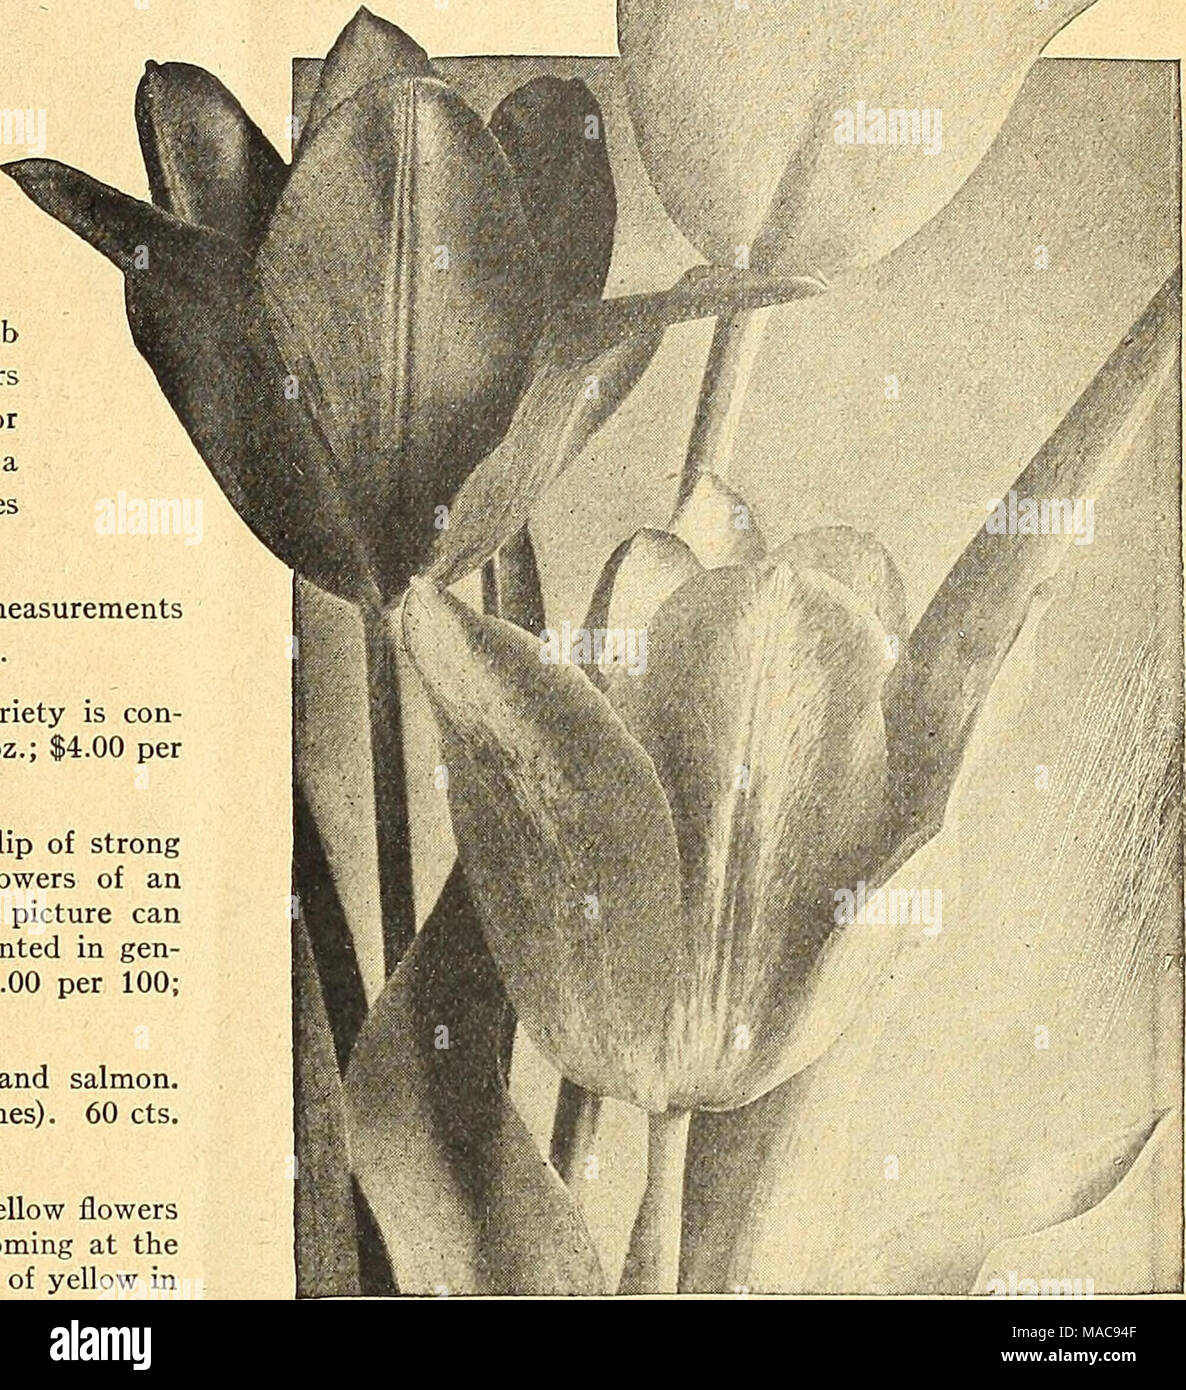 Dreer S Midsummer List 1926 Group Of Cottage Garden Tulips